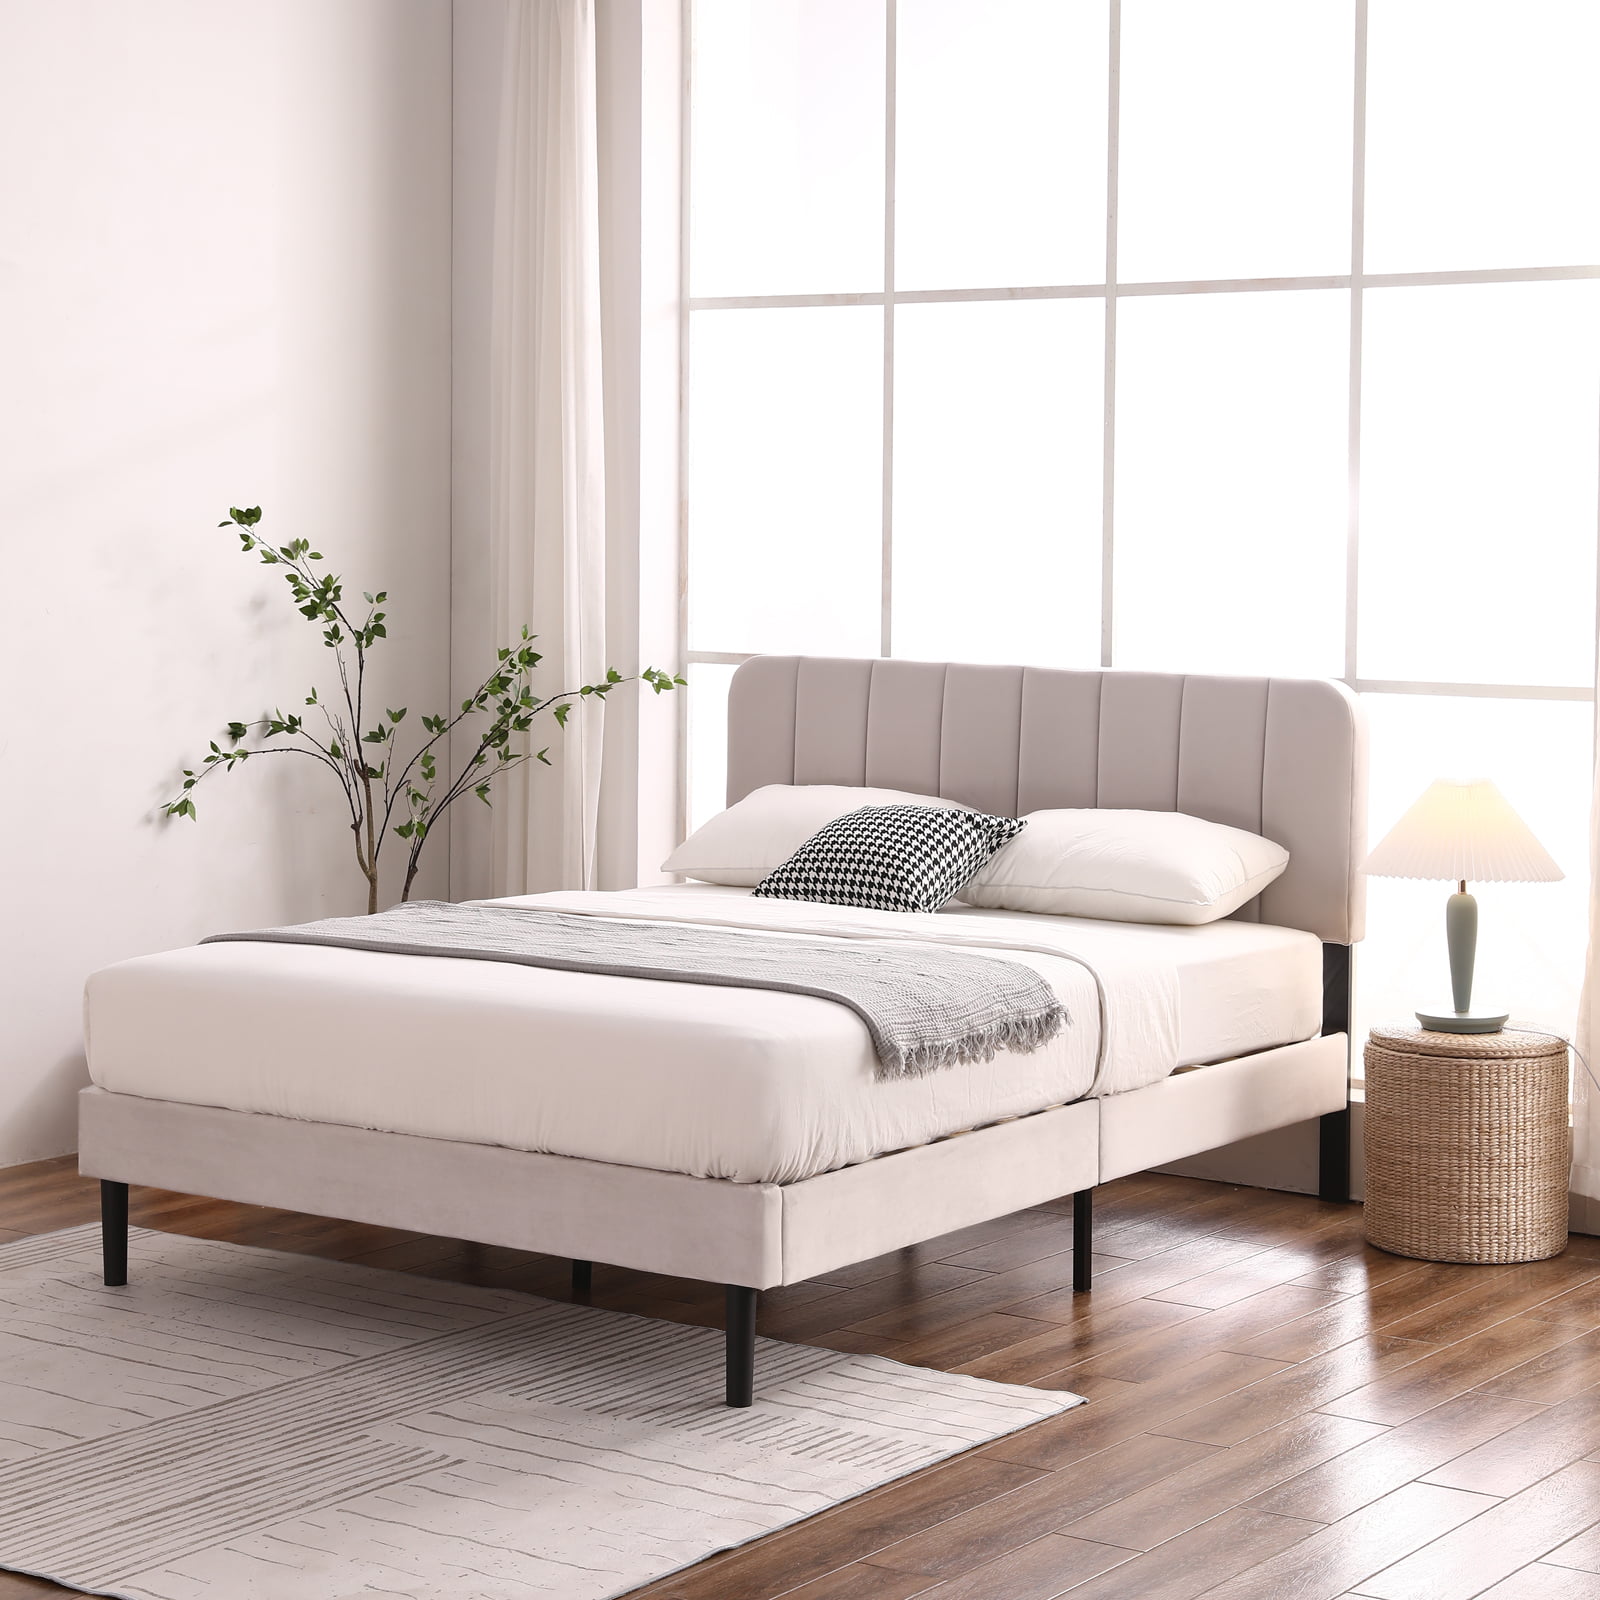 Full Upholstered Platform Bed, HSUNNS Full Size Bed Frame with